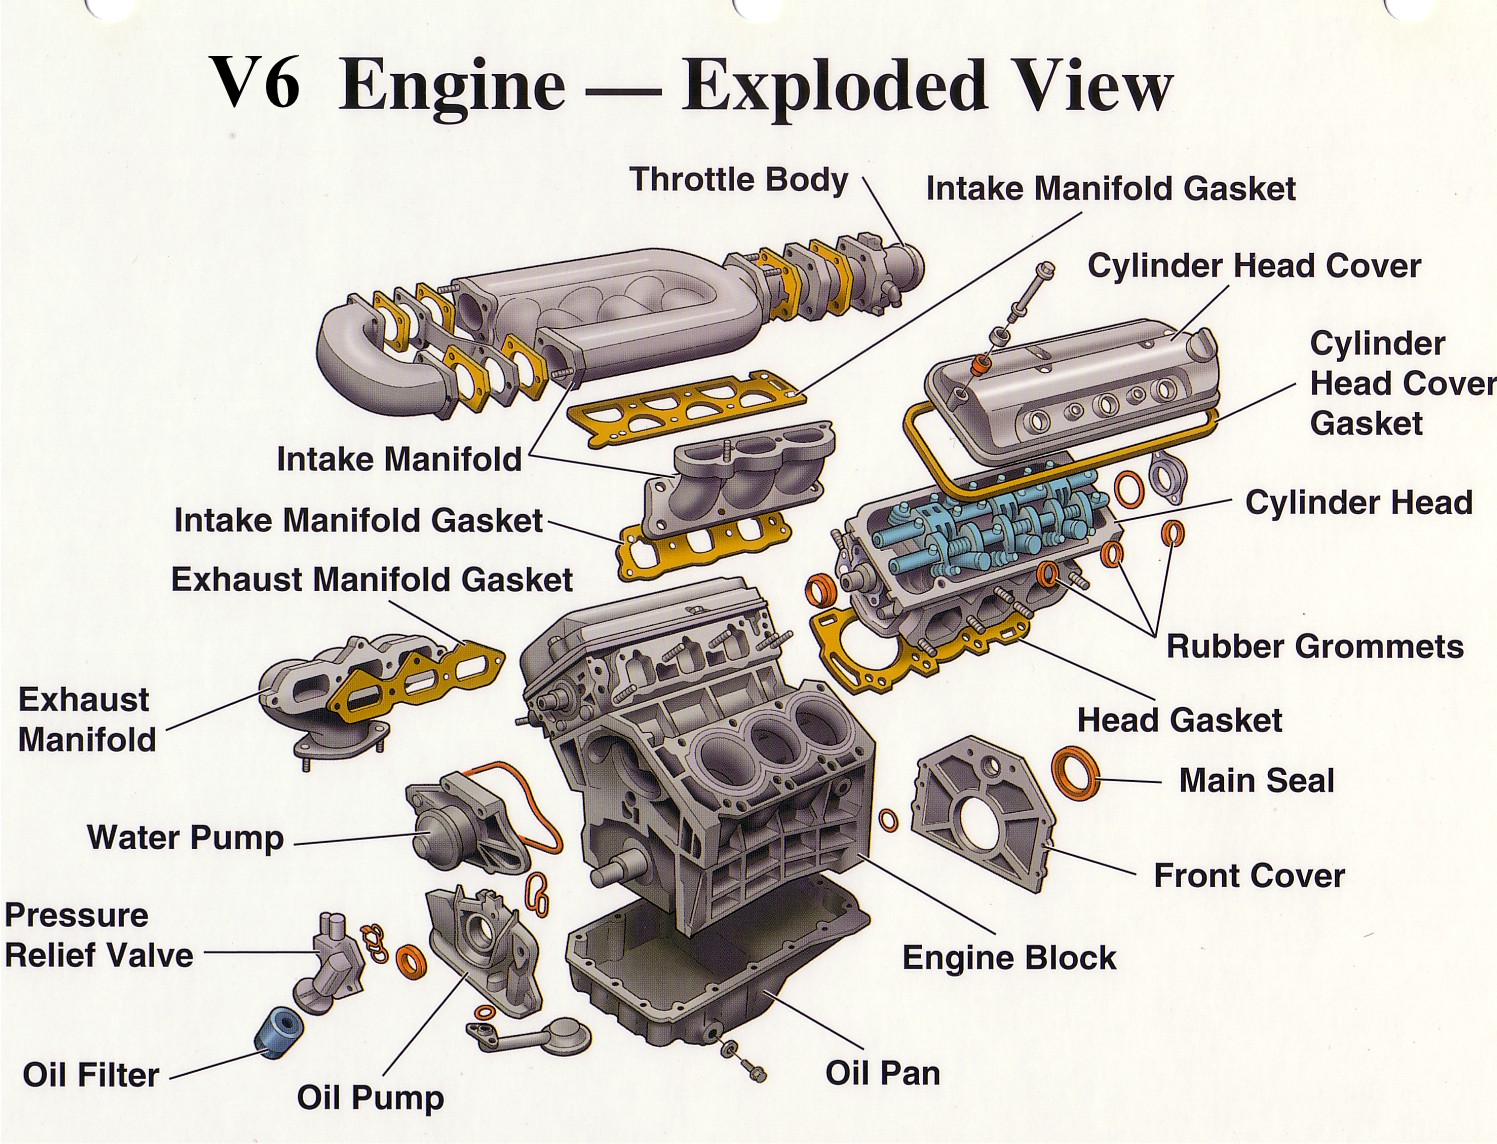 V-6 Engine Exploded View - MechanicsTips